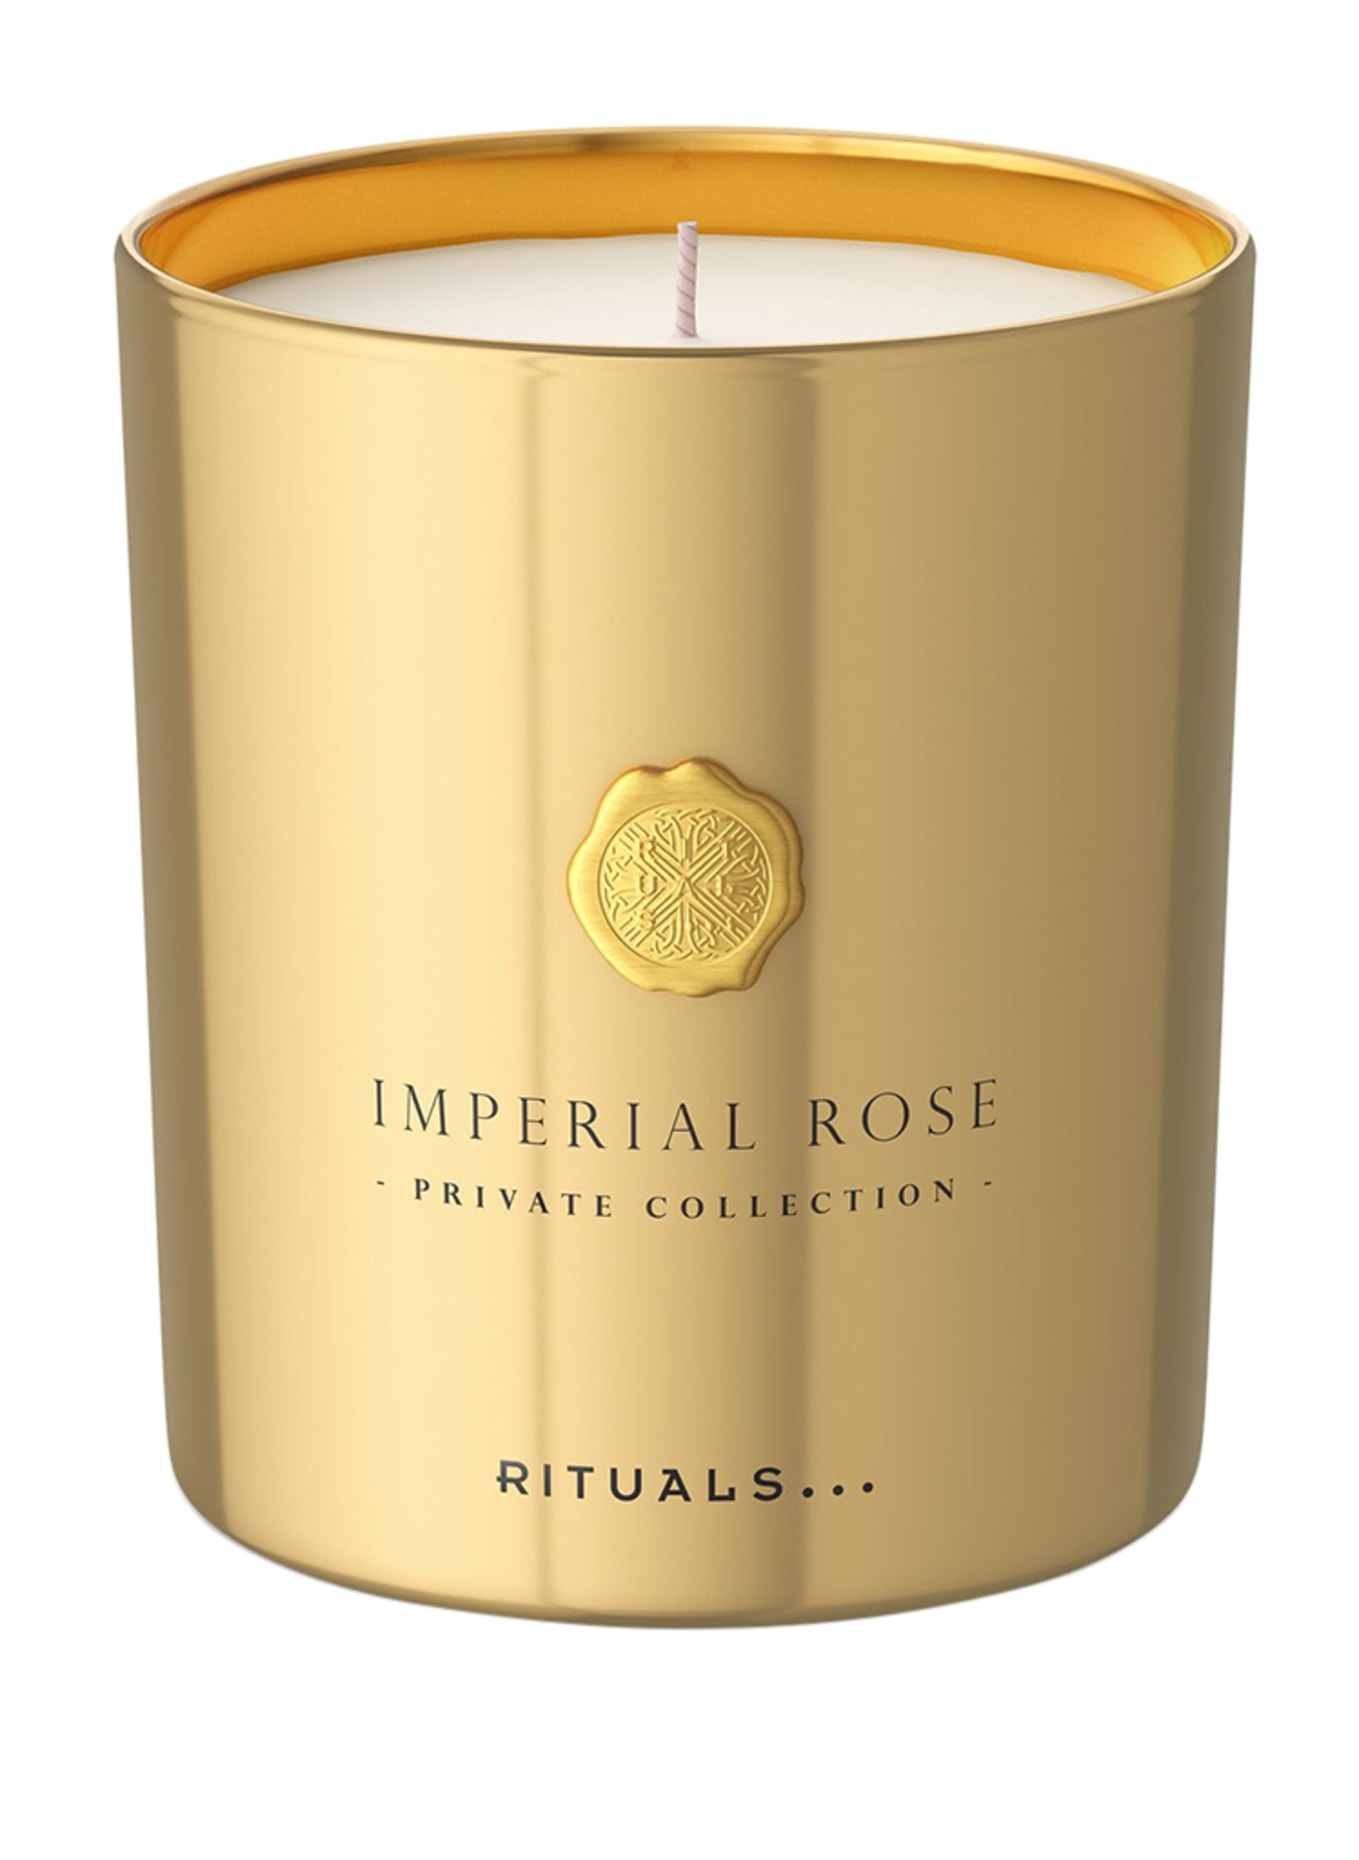 RITUALS IMPERIAL ROSE (Obrázek 1)